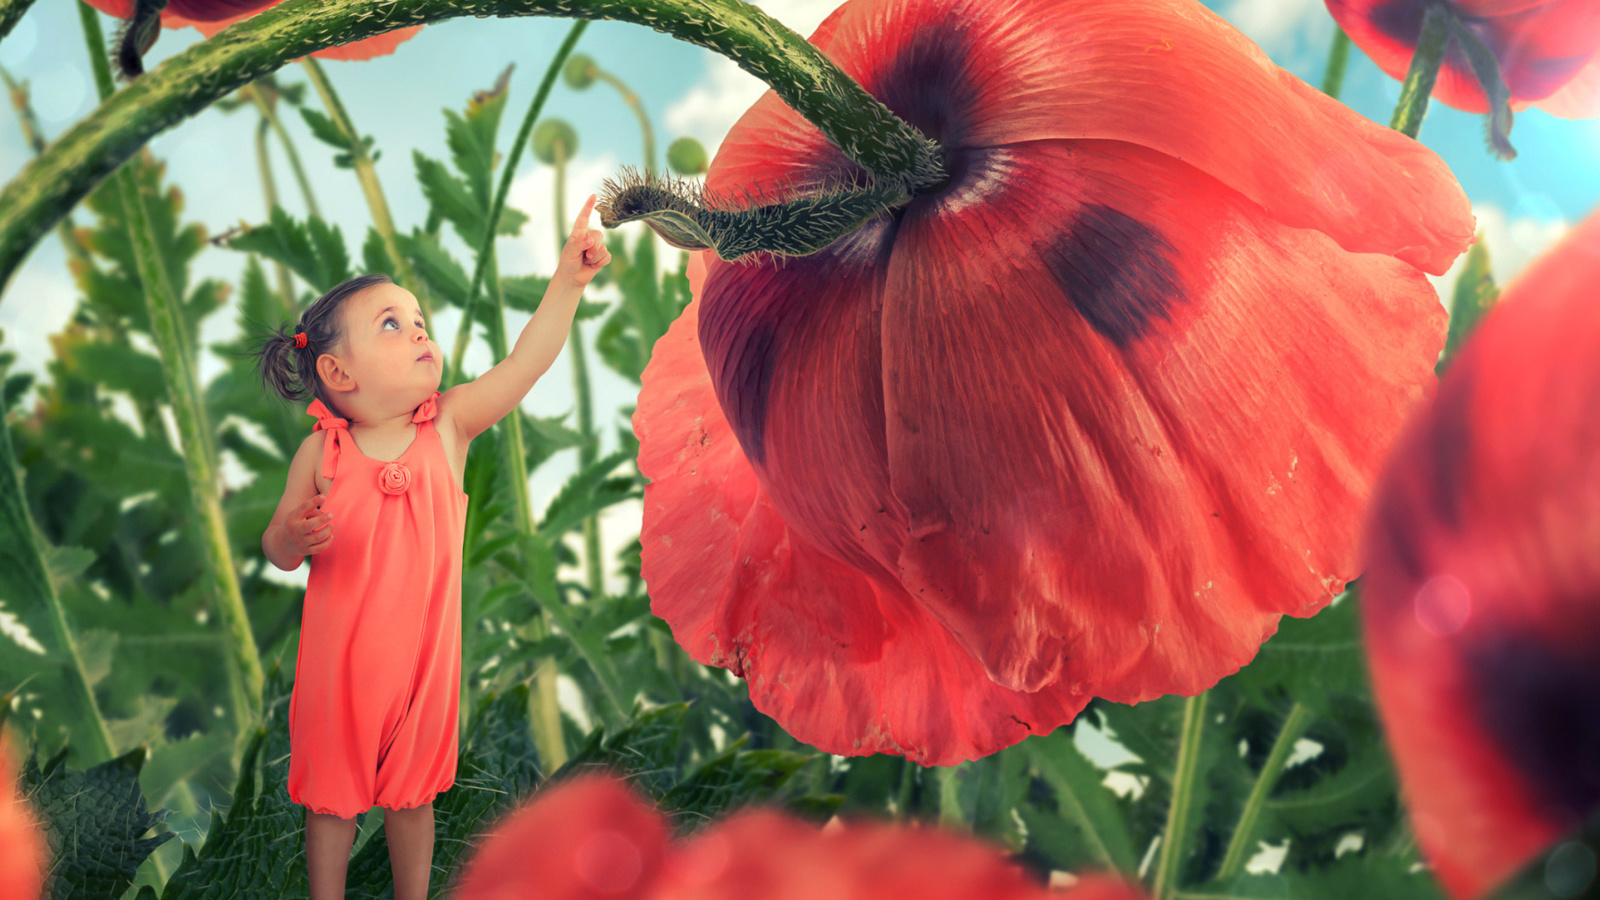 Das Little kid on poppy flower Wallpaper 1600x900